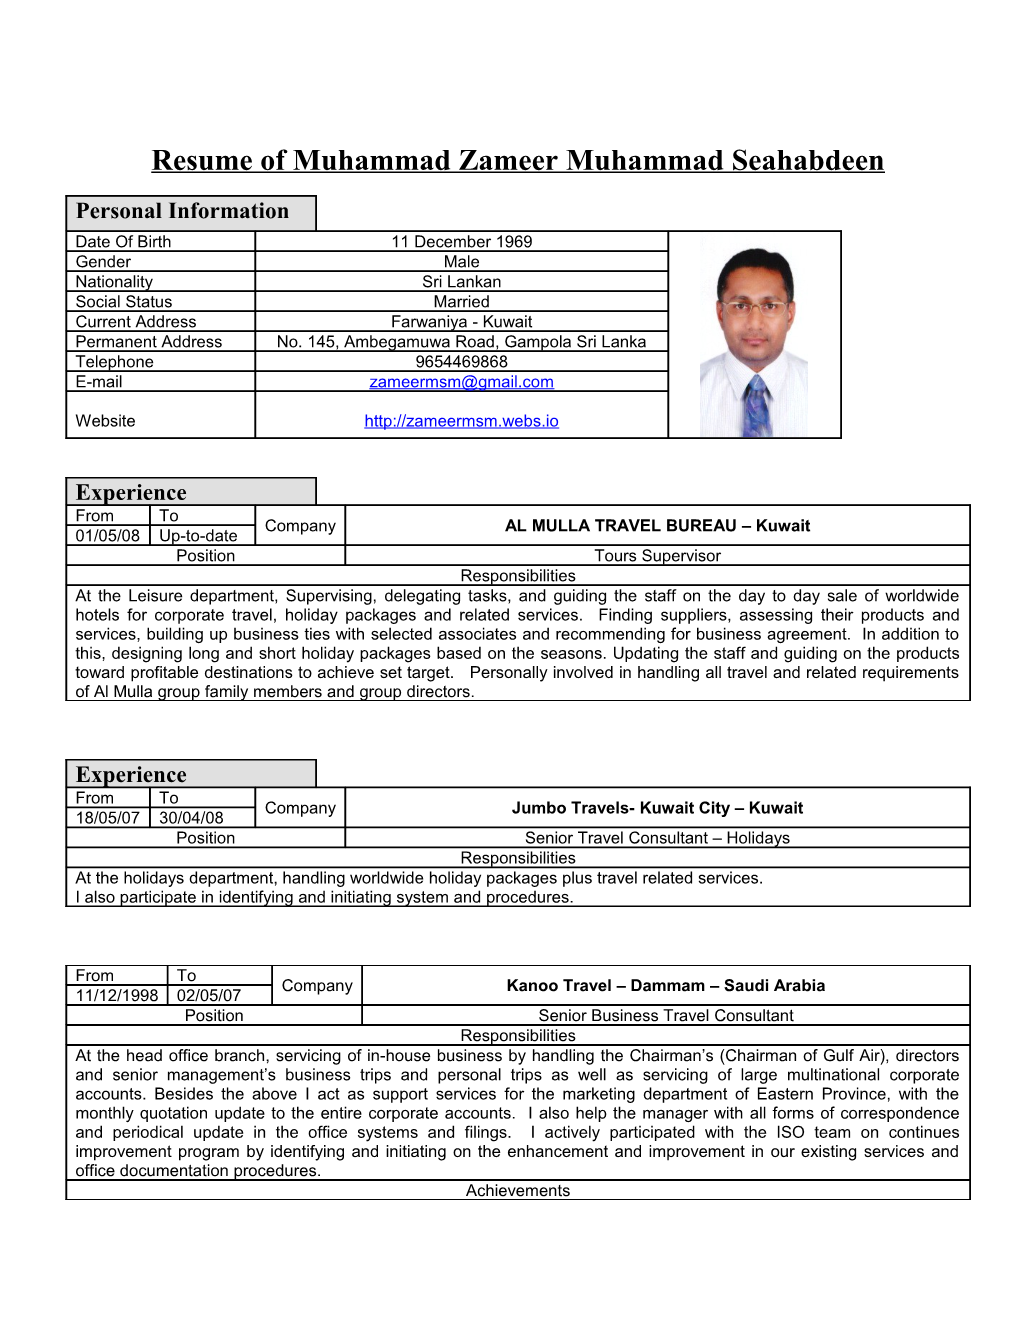 Resume of Muhammad Zameer Muhammad Seahabdeen